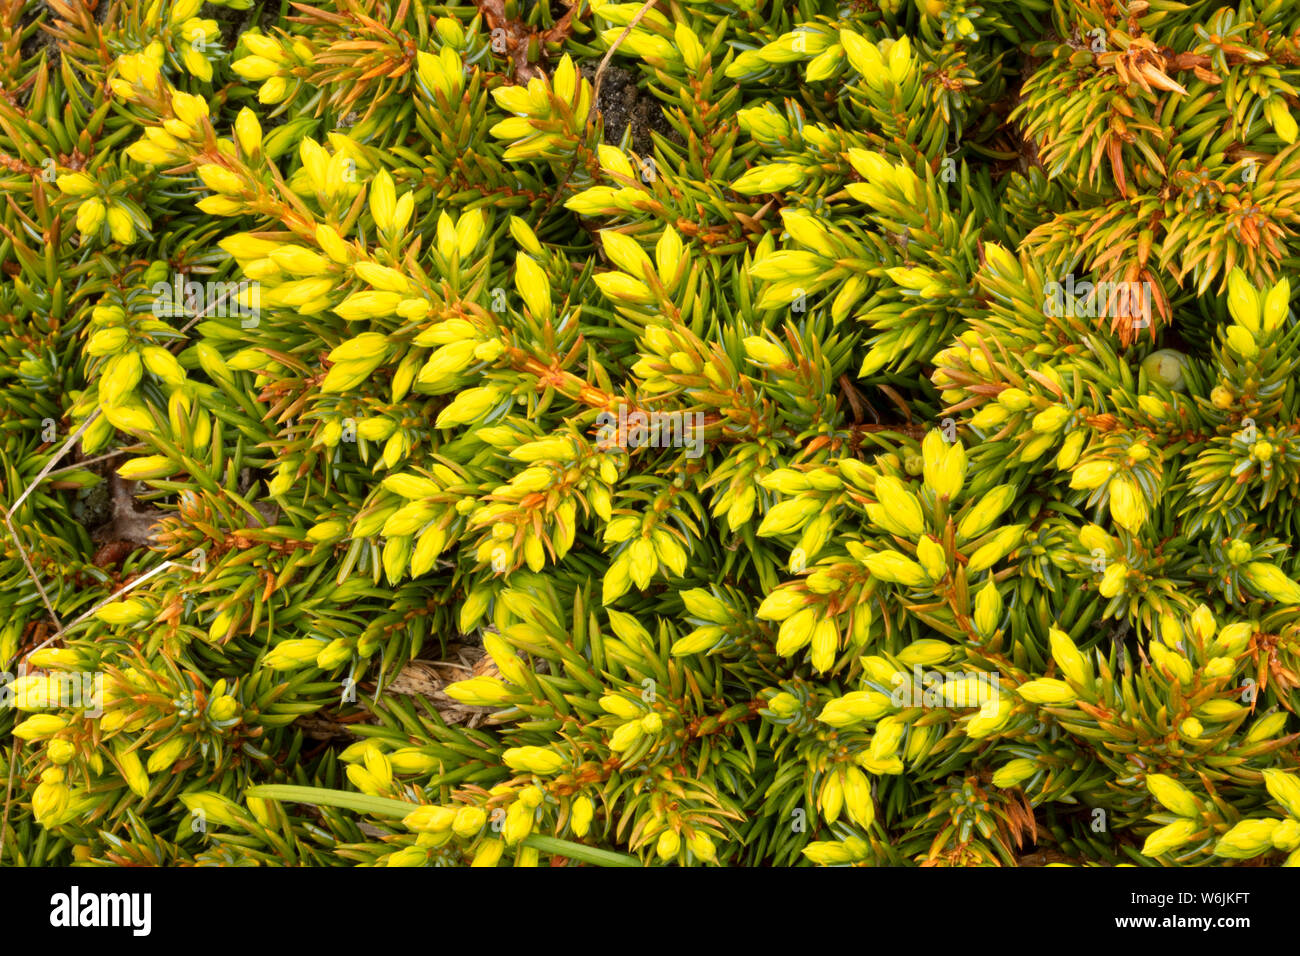 Ground juniper juniperus hi-res stock photography and images - Alamy